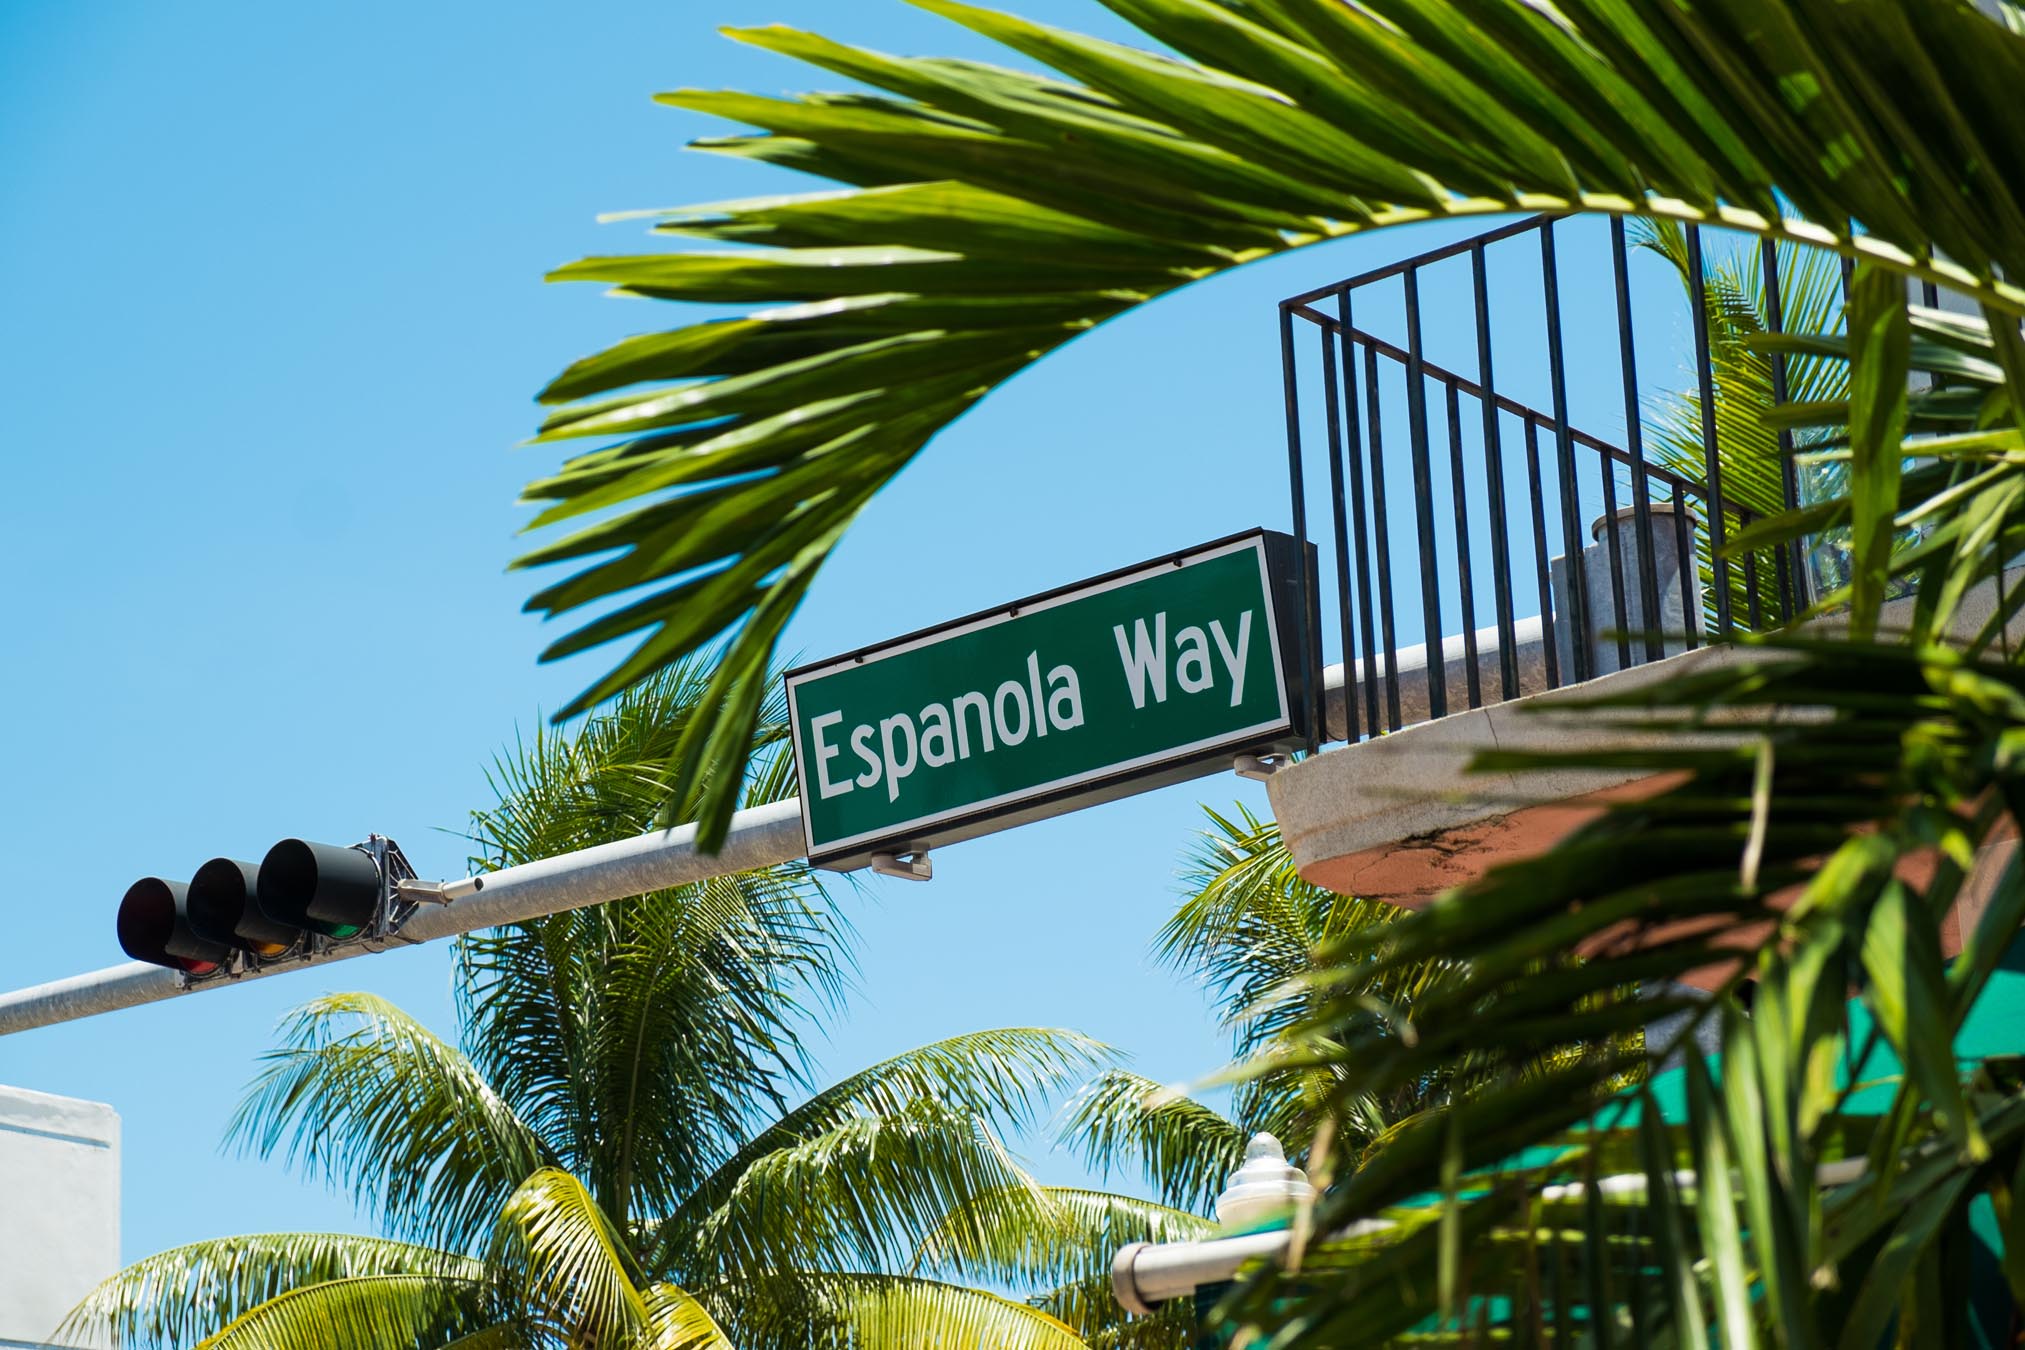 Espanola Way sign